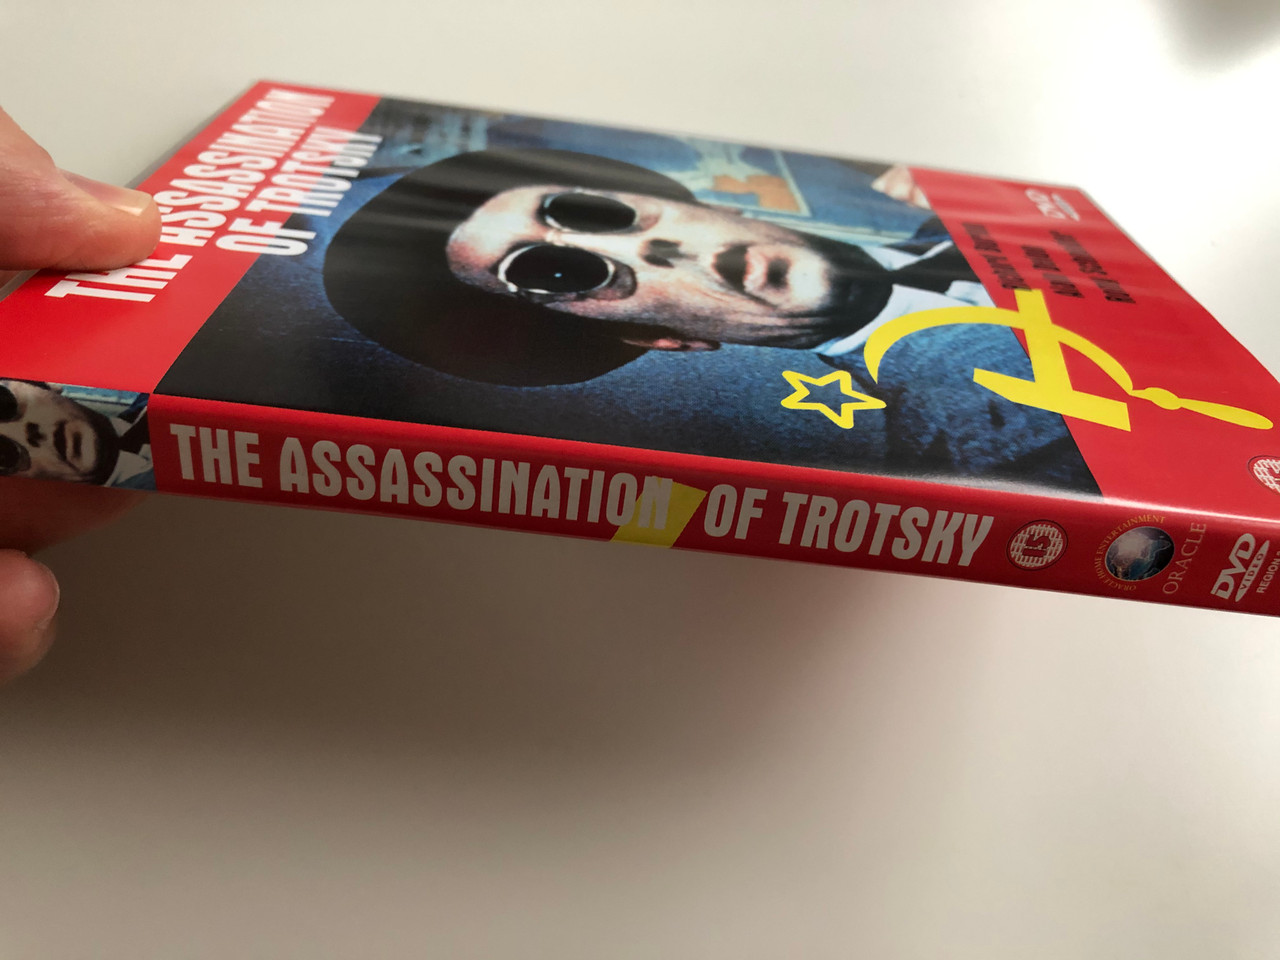 The Assassination of Trotsky DVD 1972 / Directed by Joseph Losey /  Starring: Richard Burton, Alain Delom, Romy Schneider, Valentina Cortese -  bibleinmylanguage